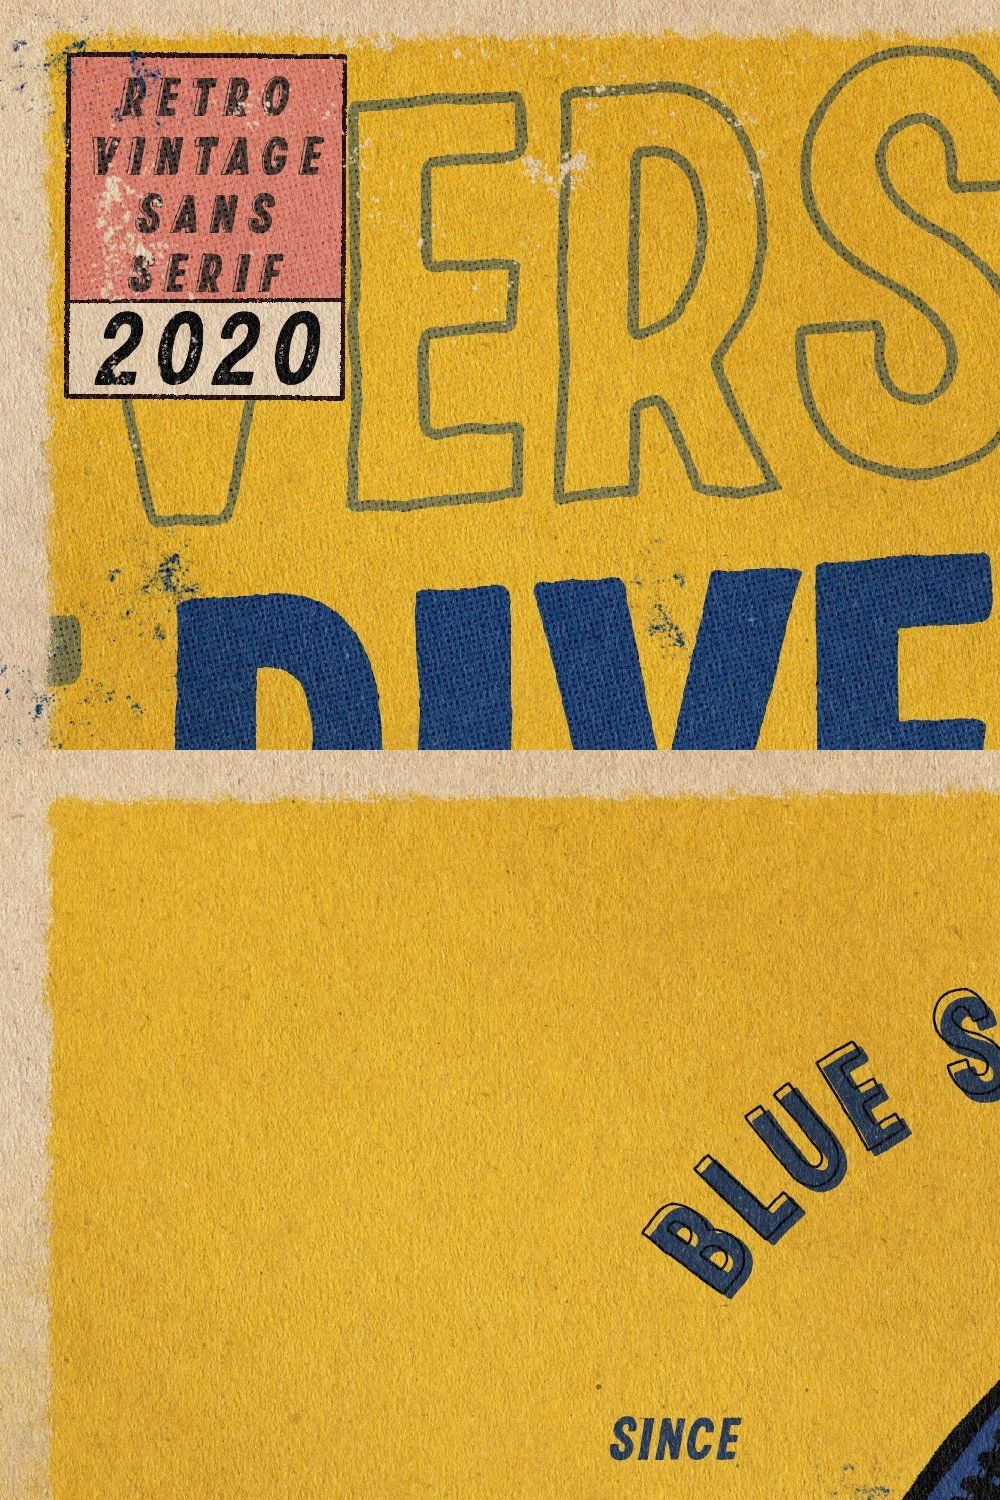 RIVERSIDE | Retro Sans Serif pinterest preview image.